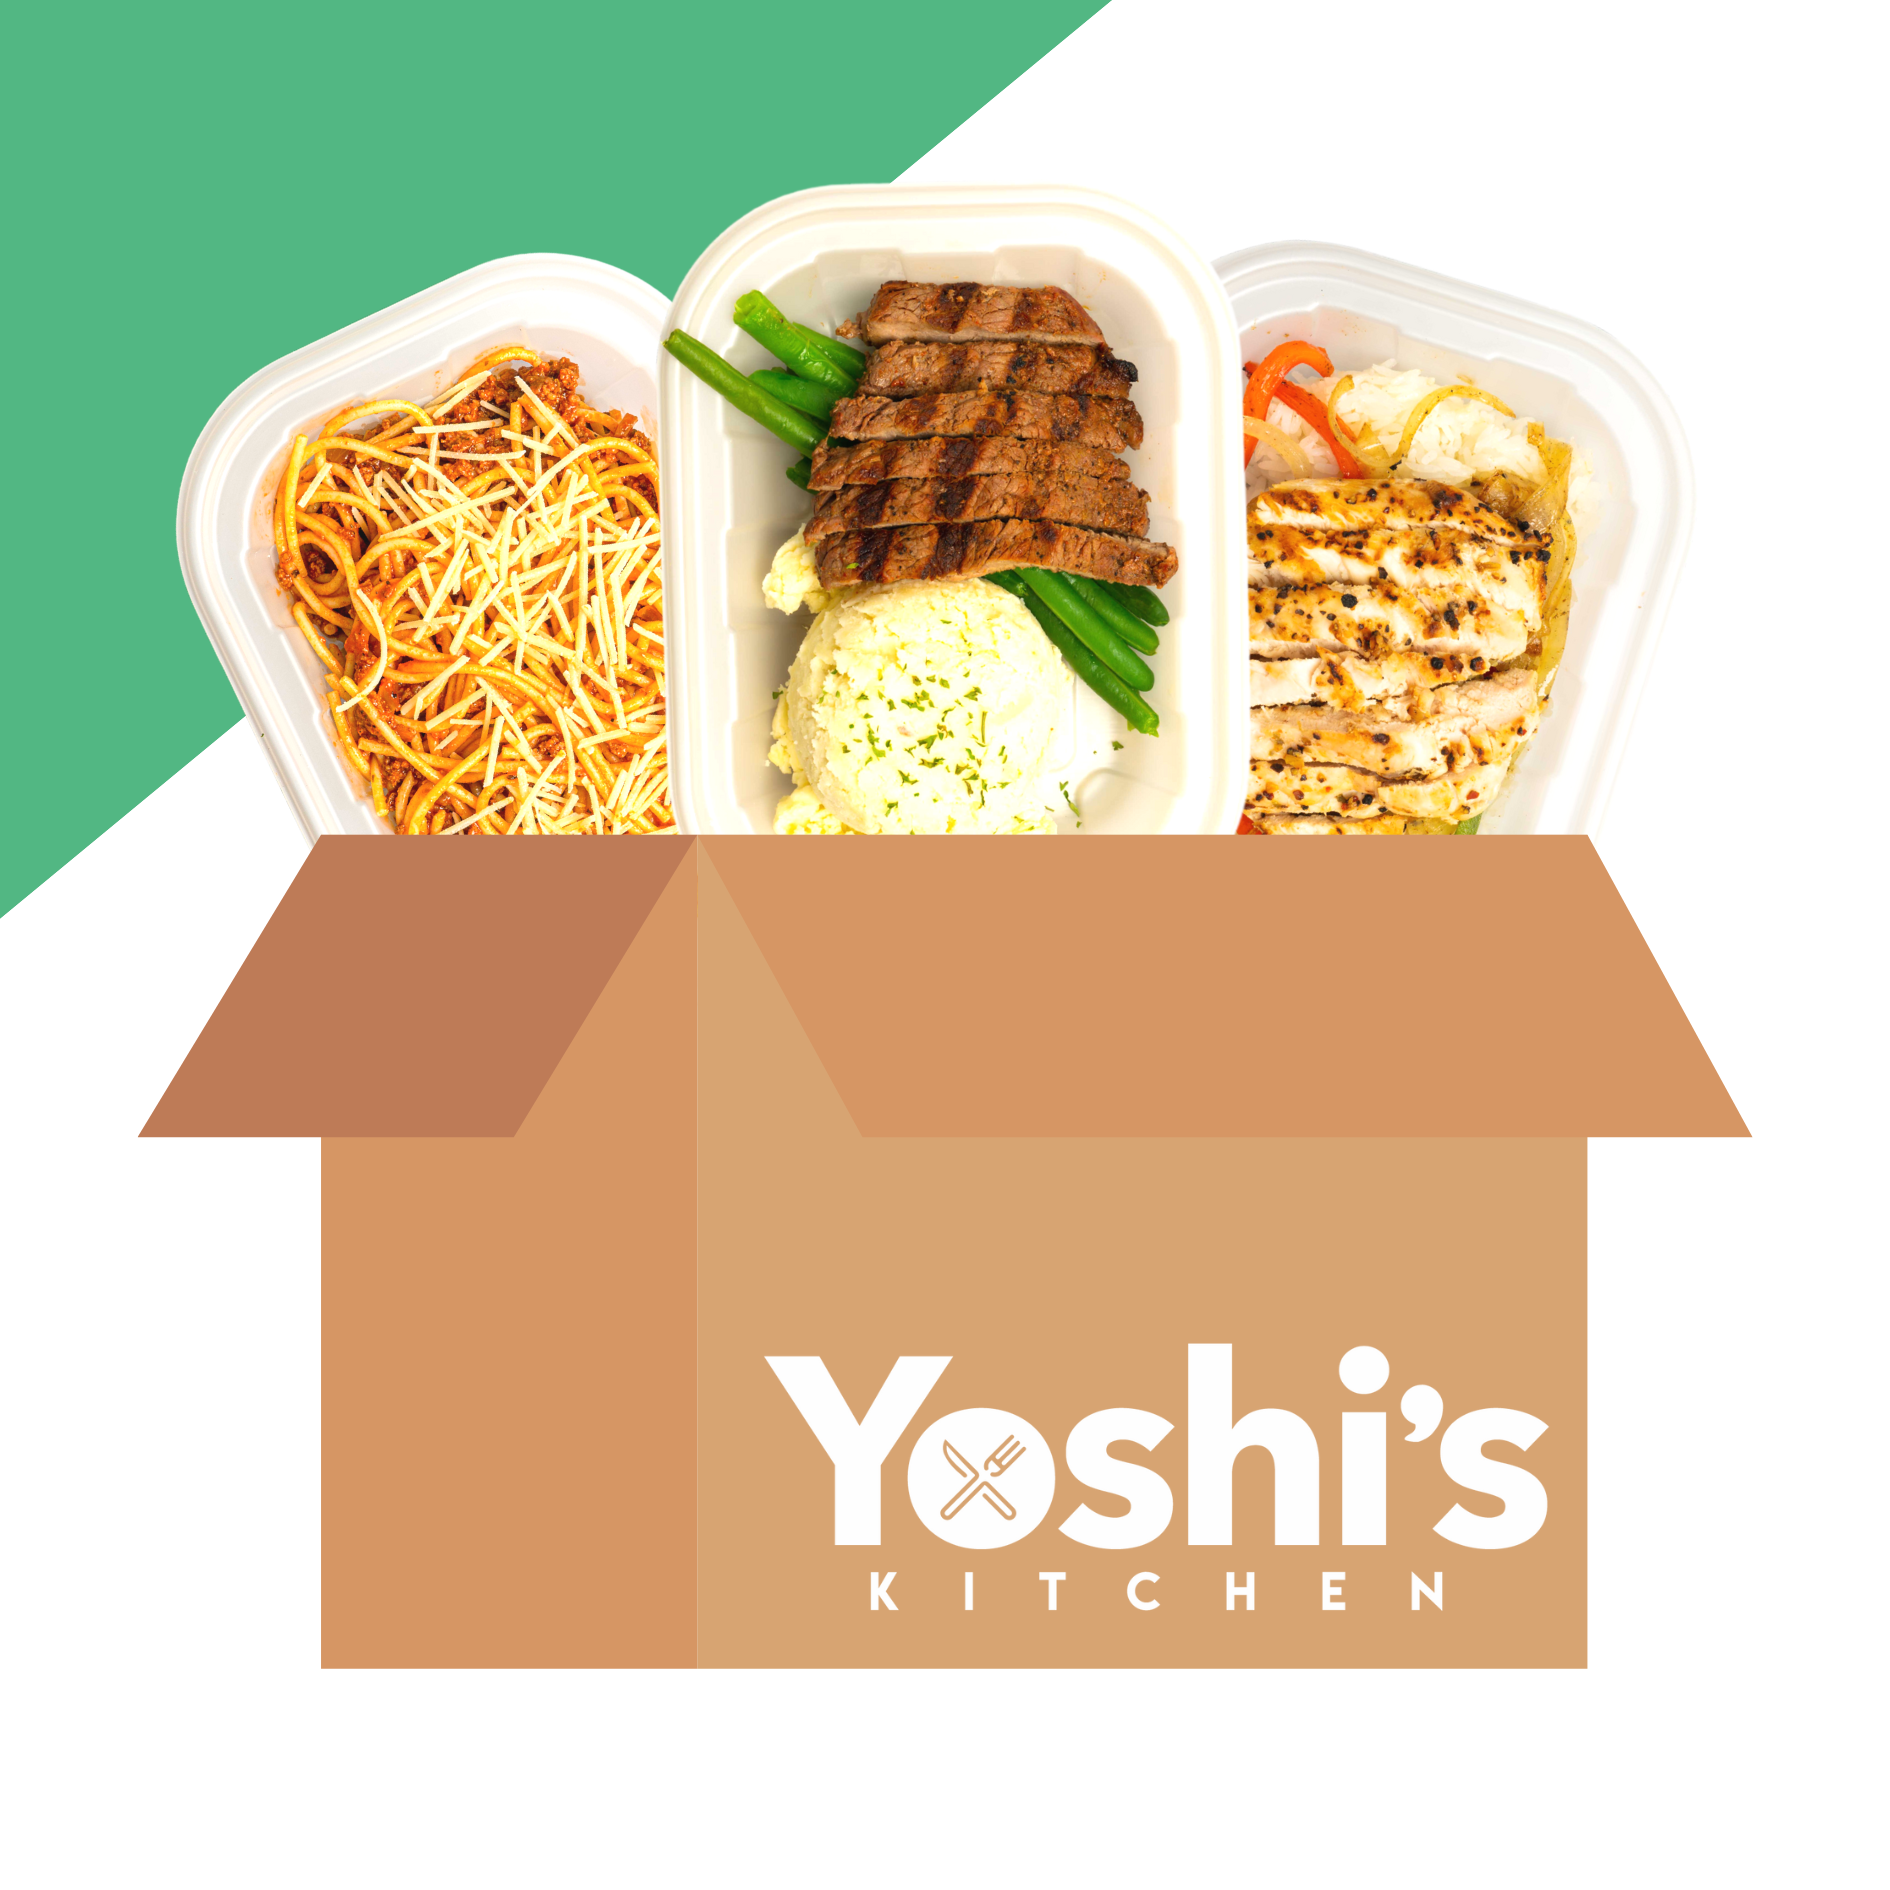 Best Sellers Box - Yoshi's Kitchen – Yoshis Kitchen